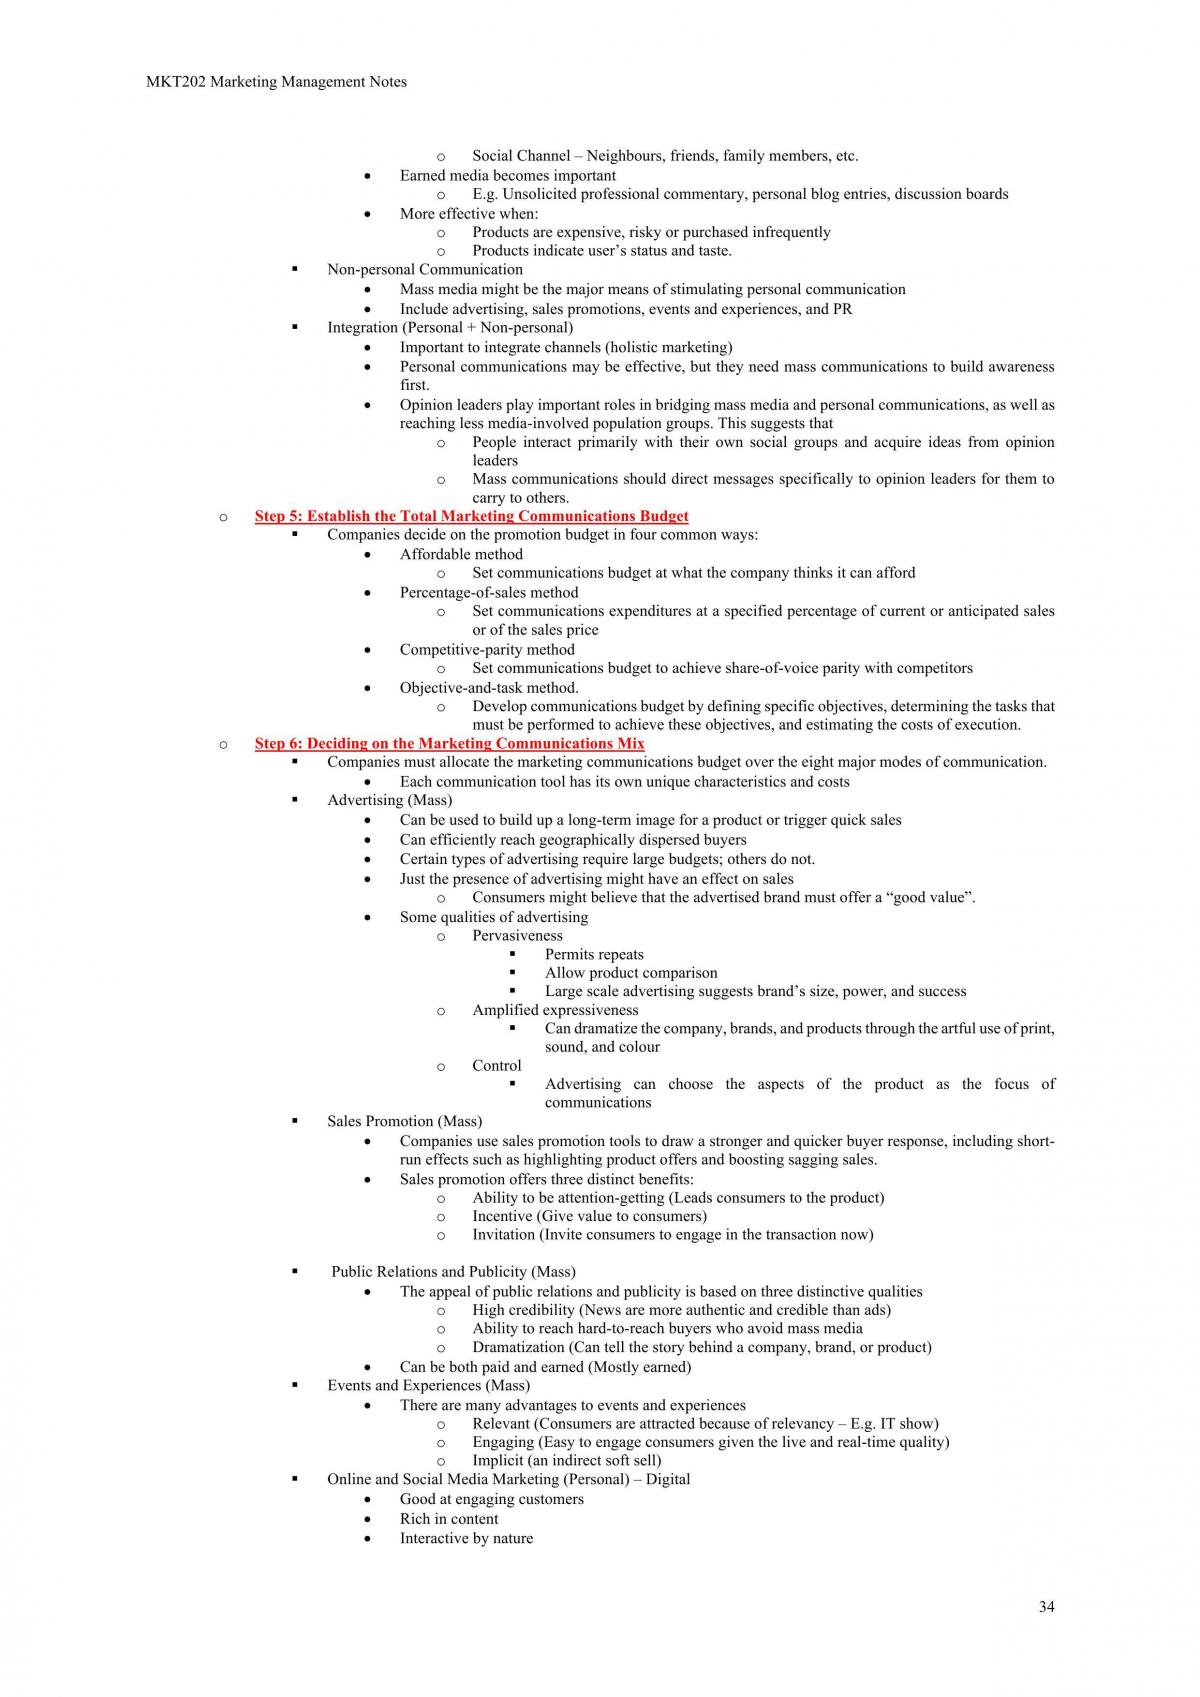 MKT202 - Marketing Management Notes - Page 34